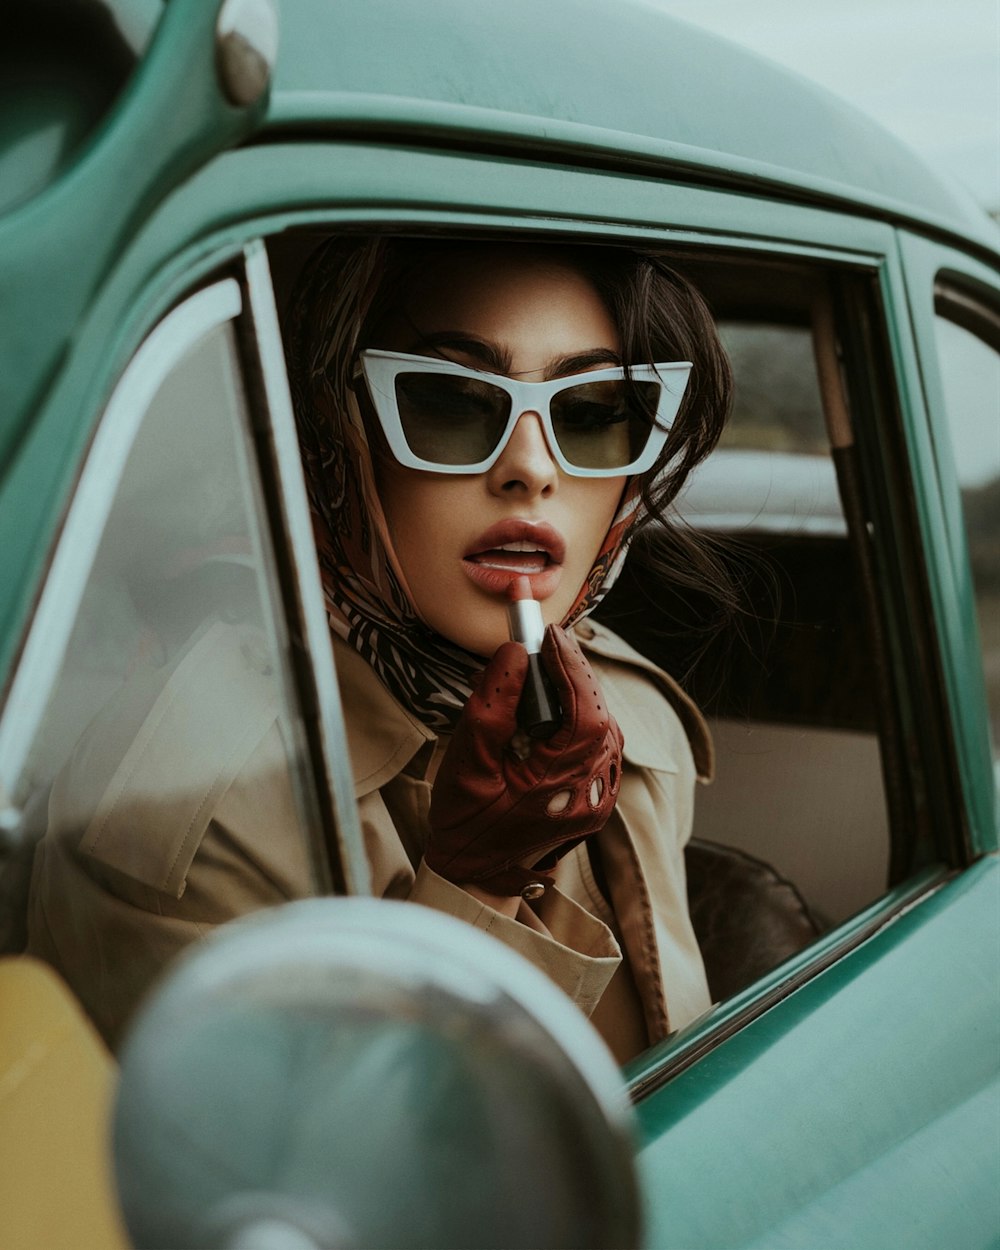 a woman in sunglasses smoking a cigarette in a car